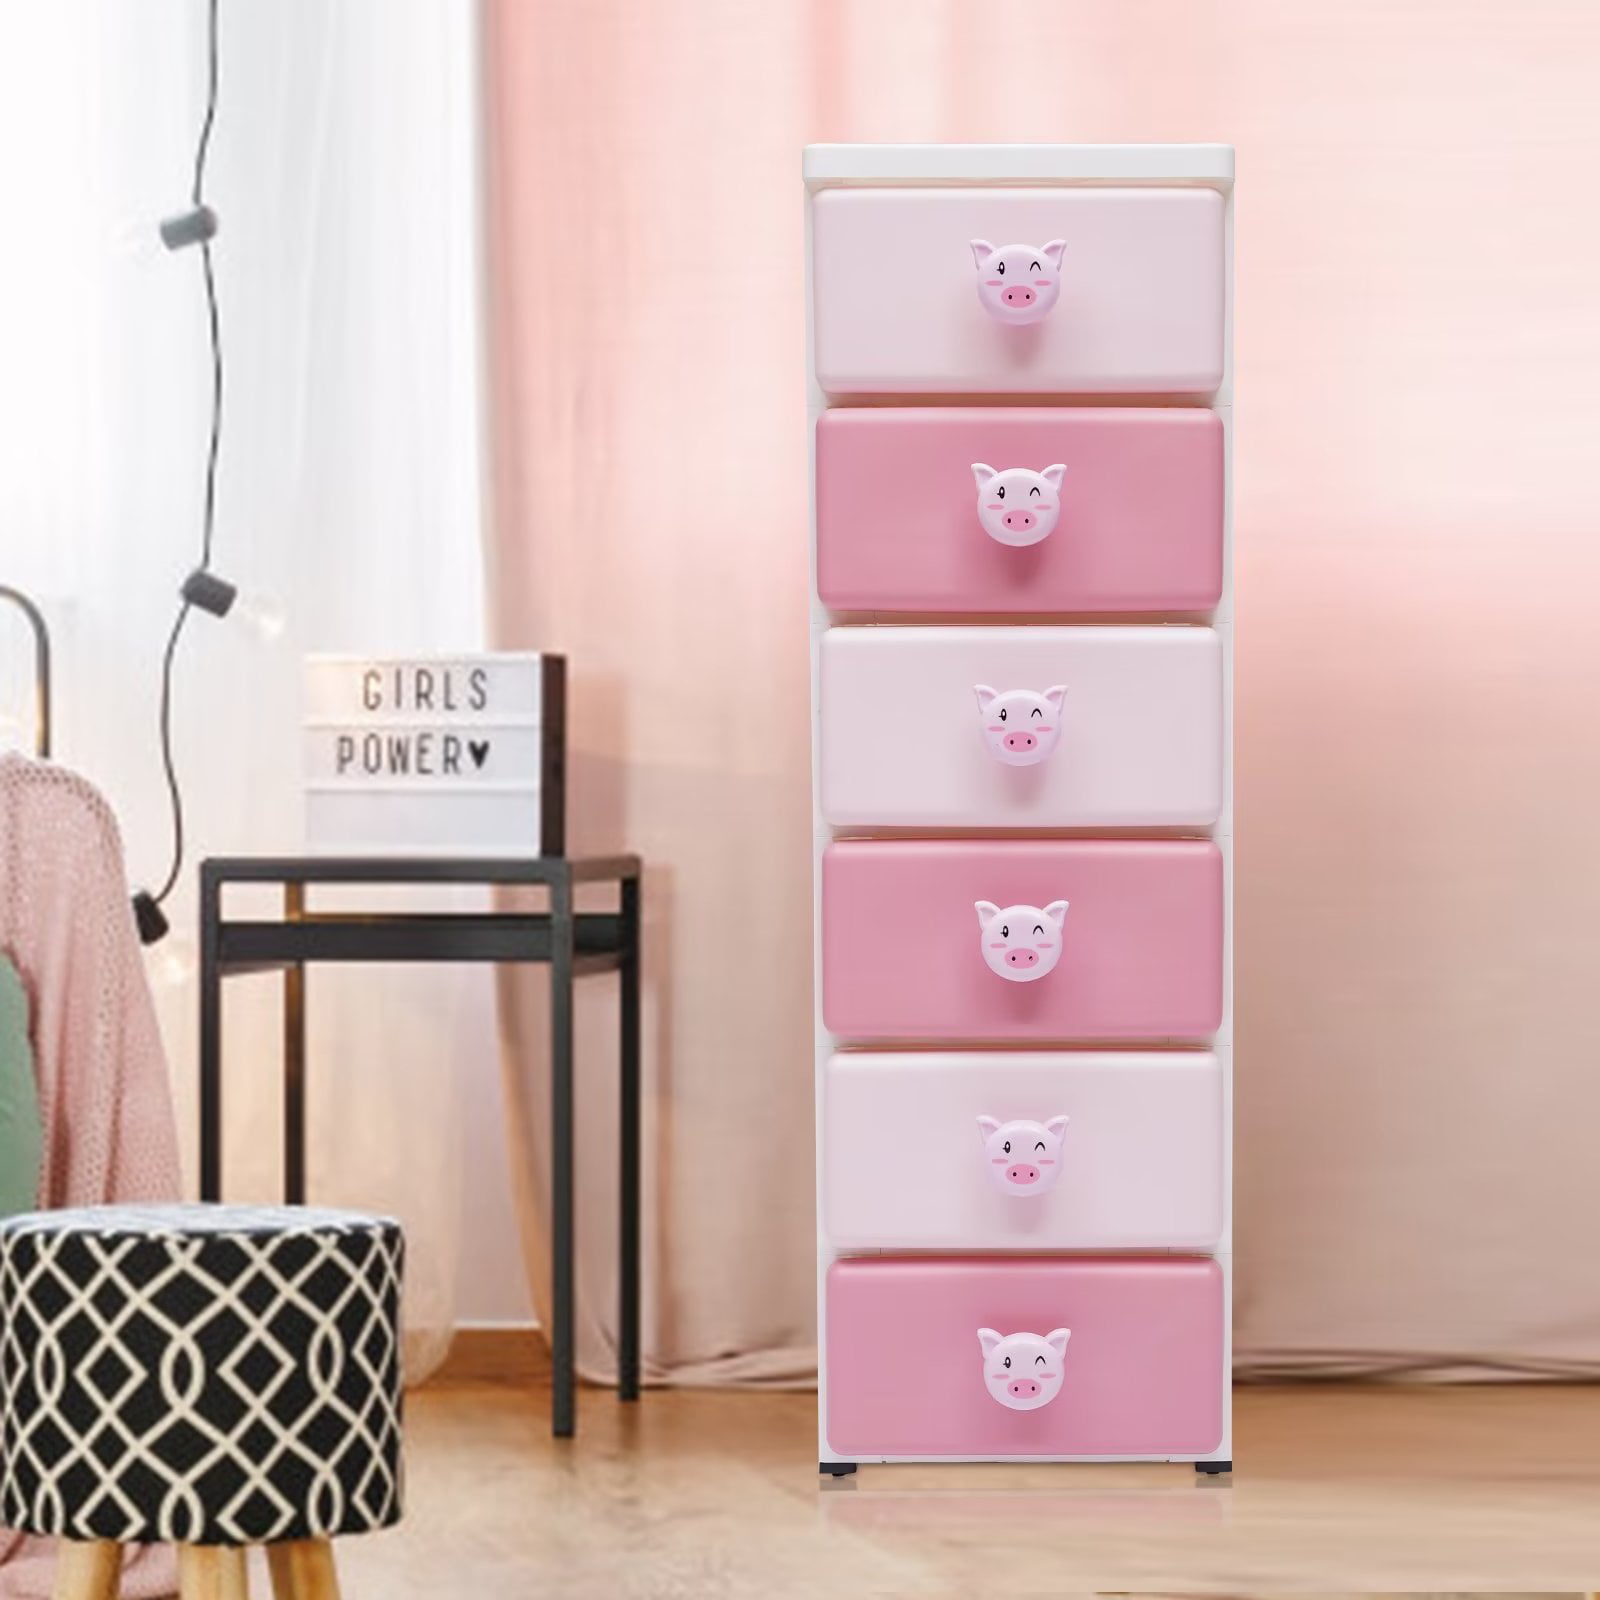 6-Layer Storage Drawers Storage Bins & Boxes Plastic Storage Cabinet Pink